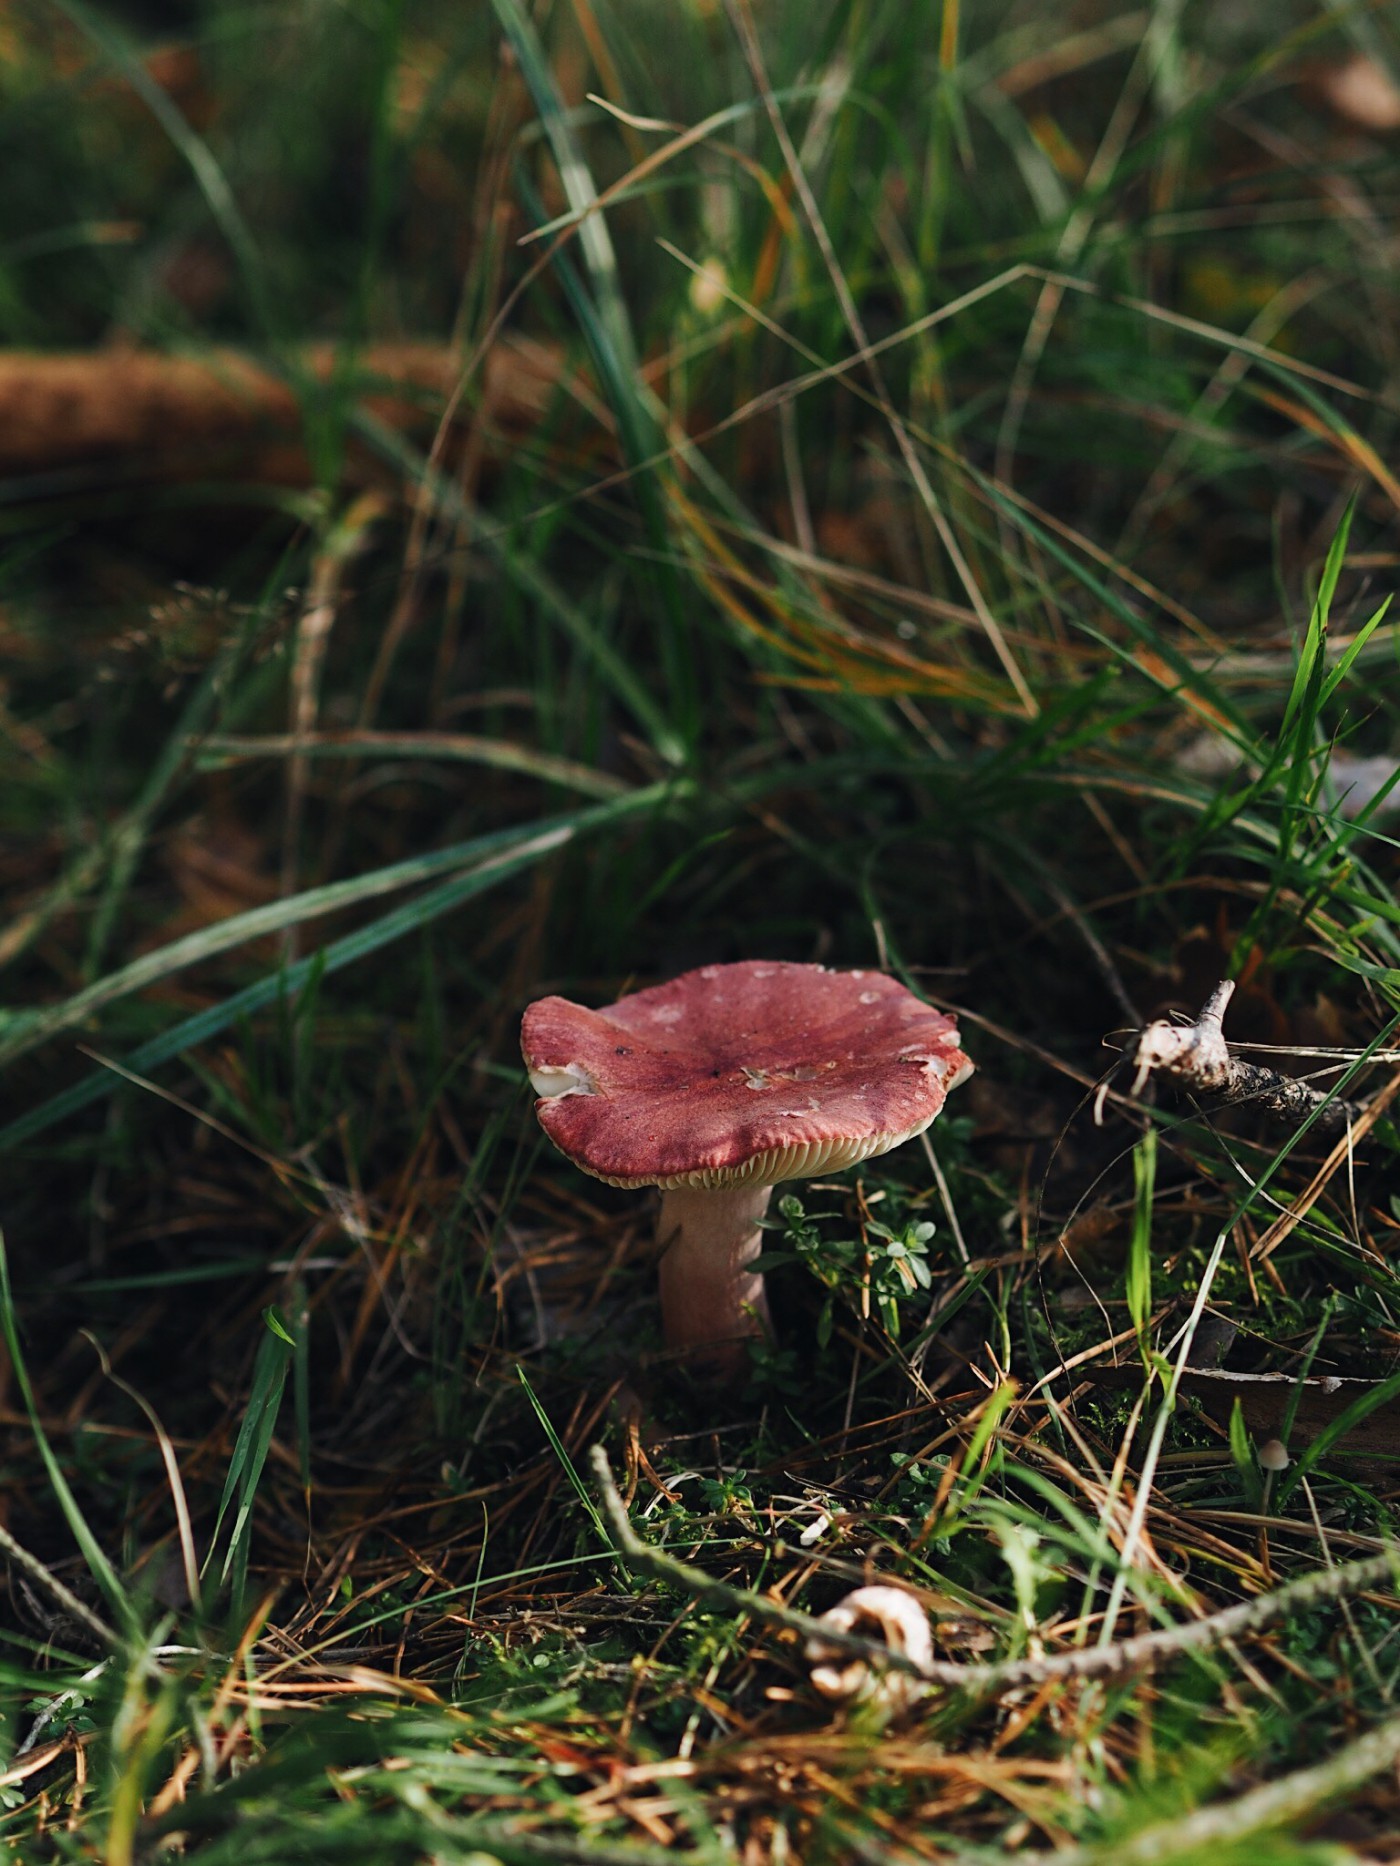 mushroom fairytale folkmagazine evafedeveka photography